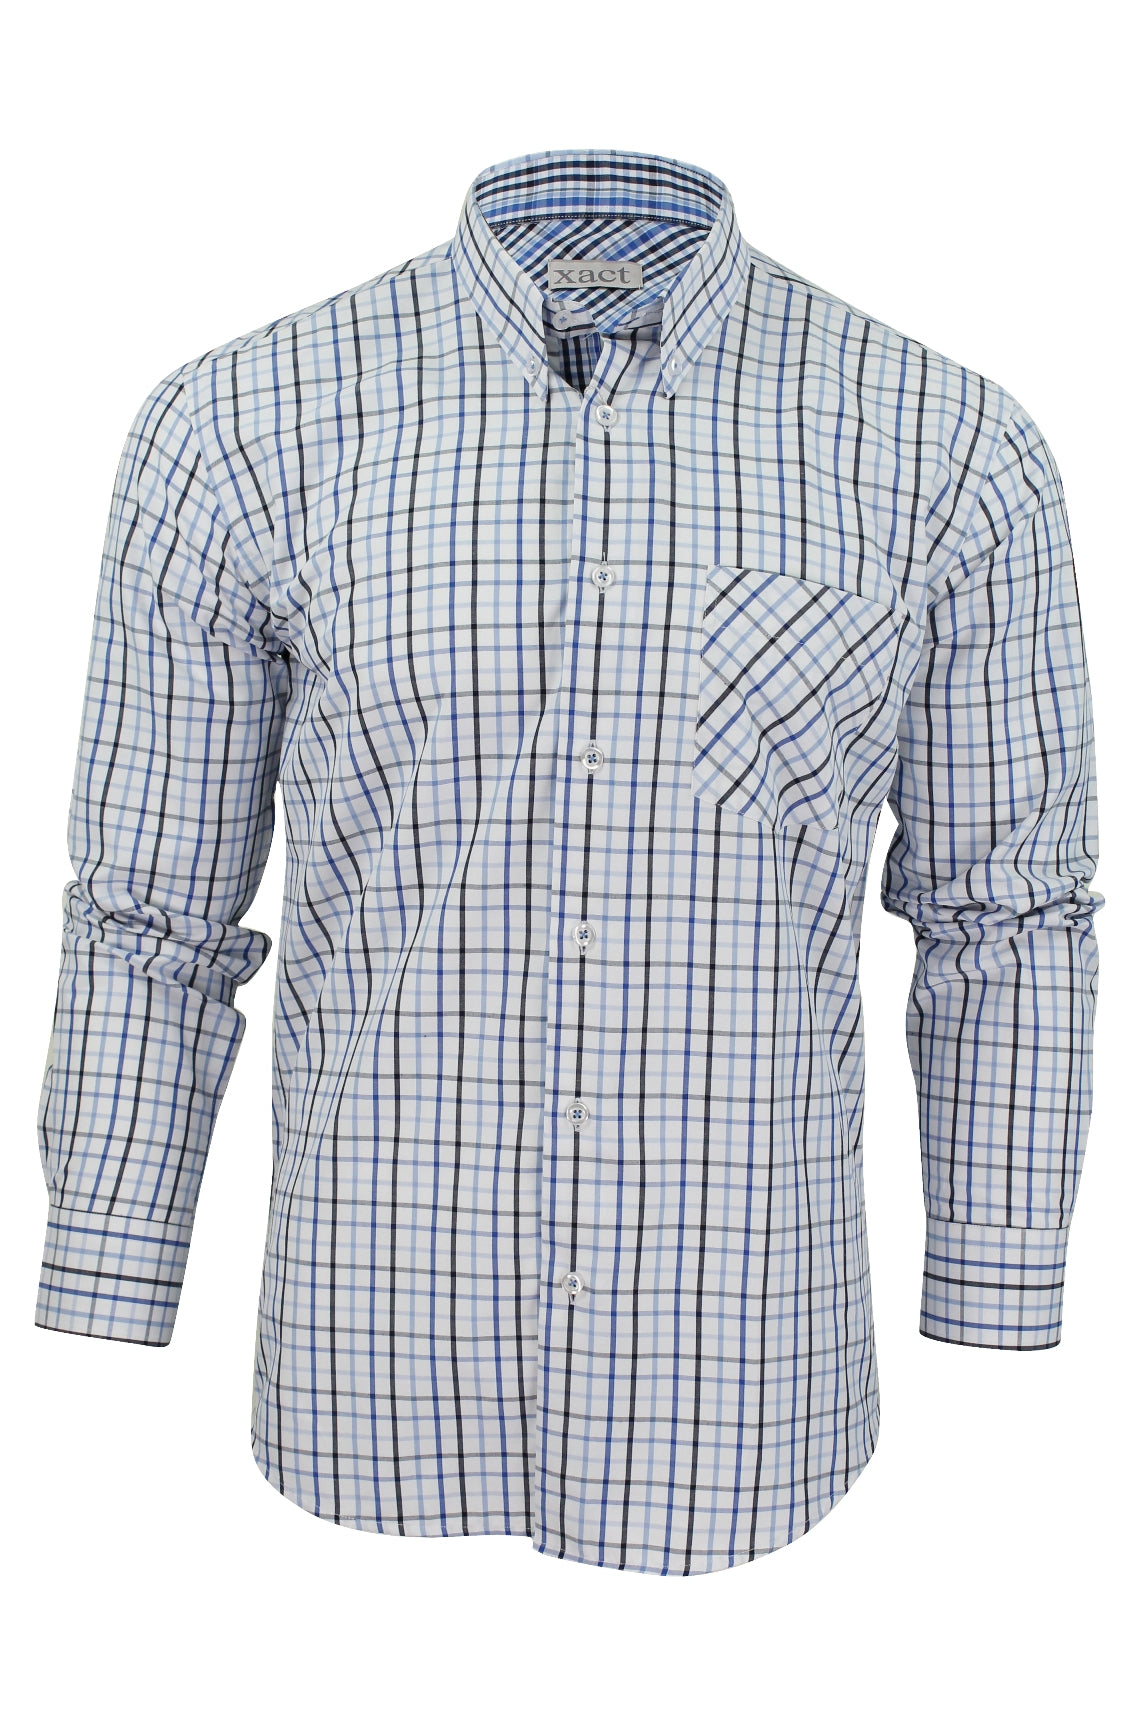 Mens Long Sleeved Check Shirt by Xact Clothing, 01, 1510116, Blue